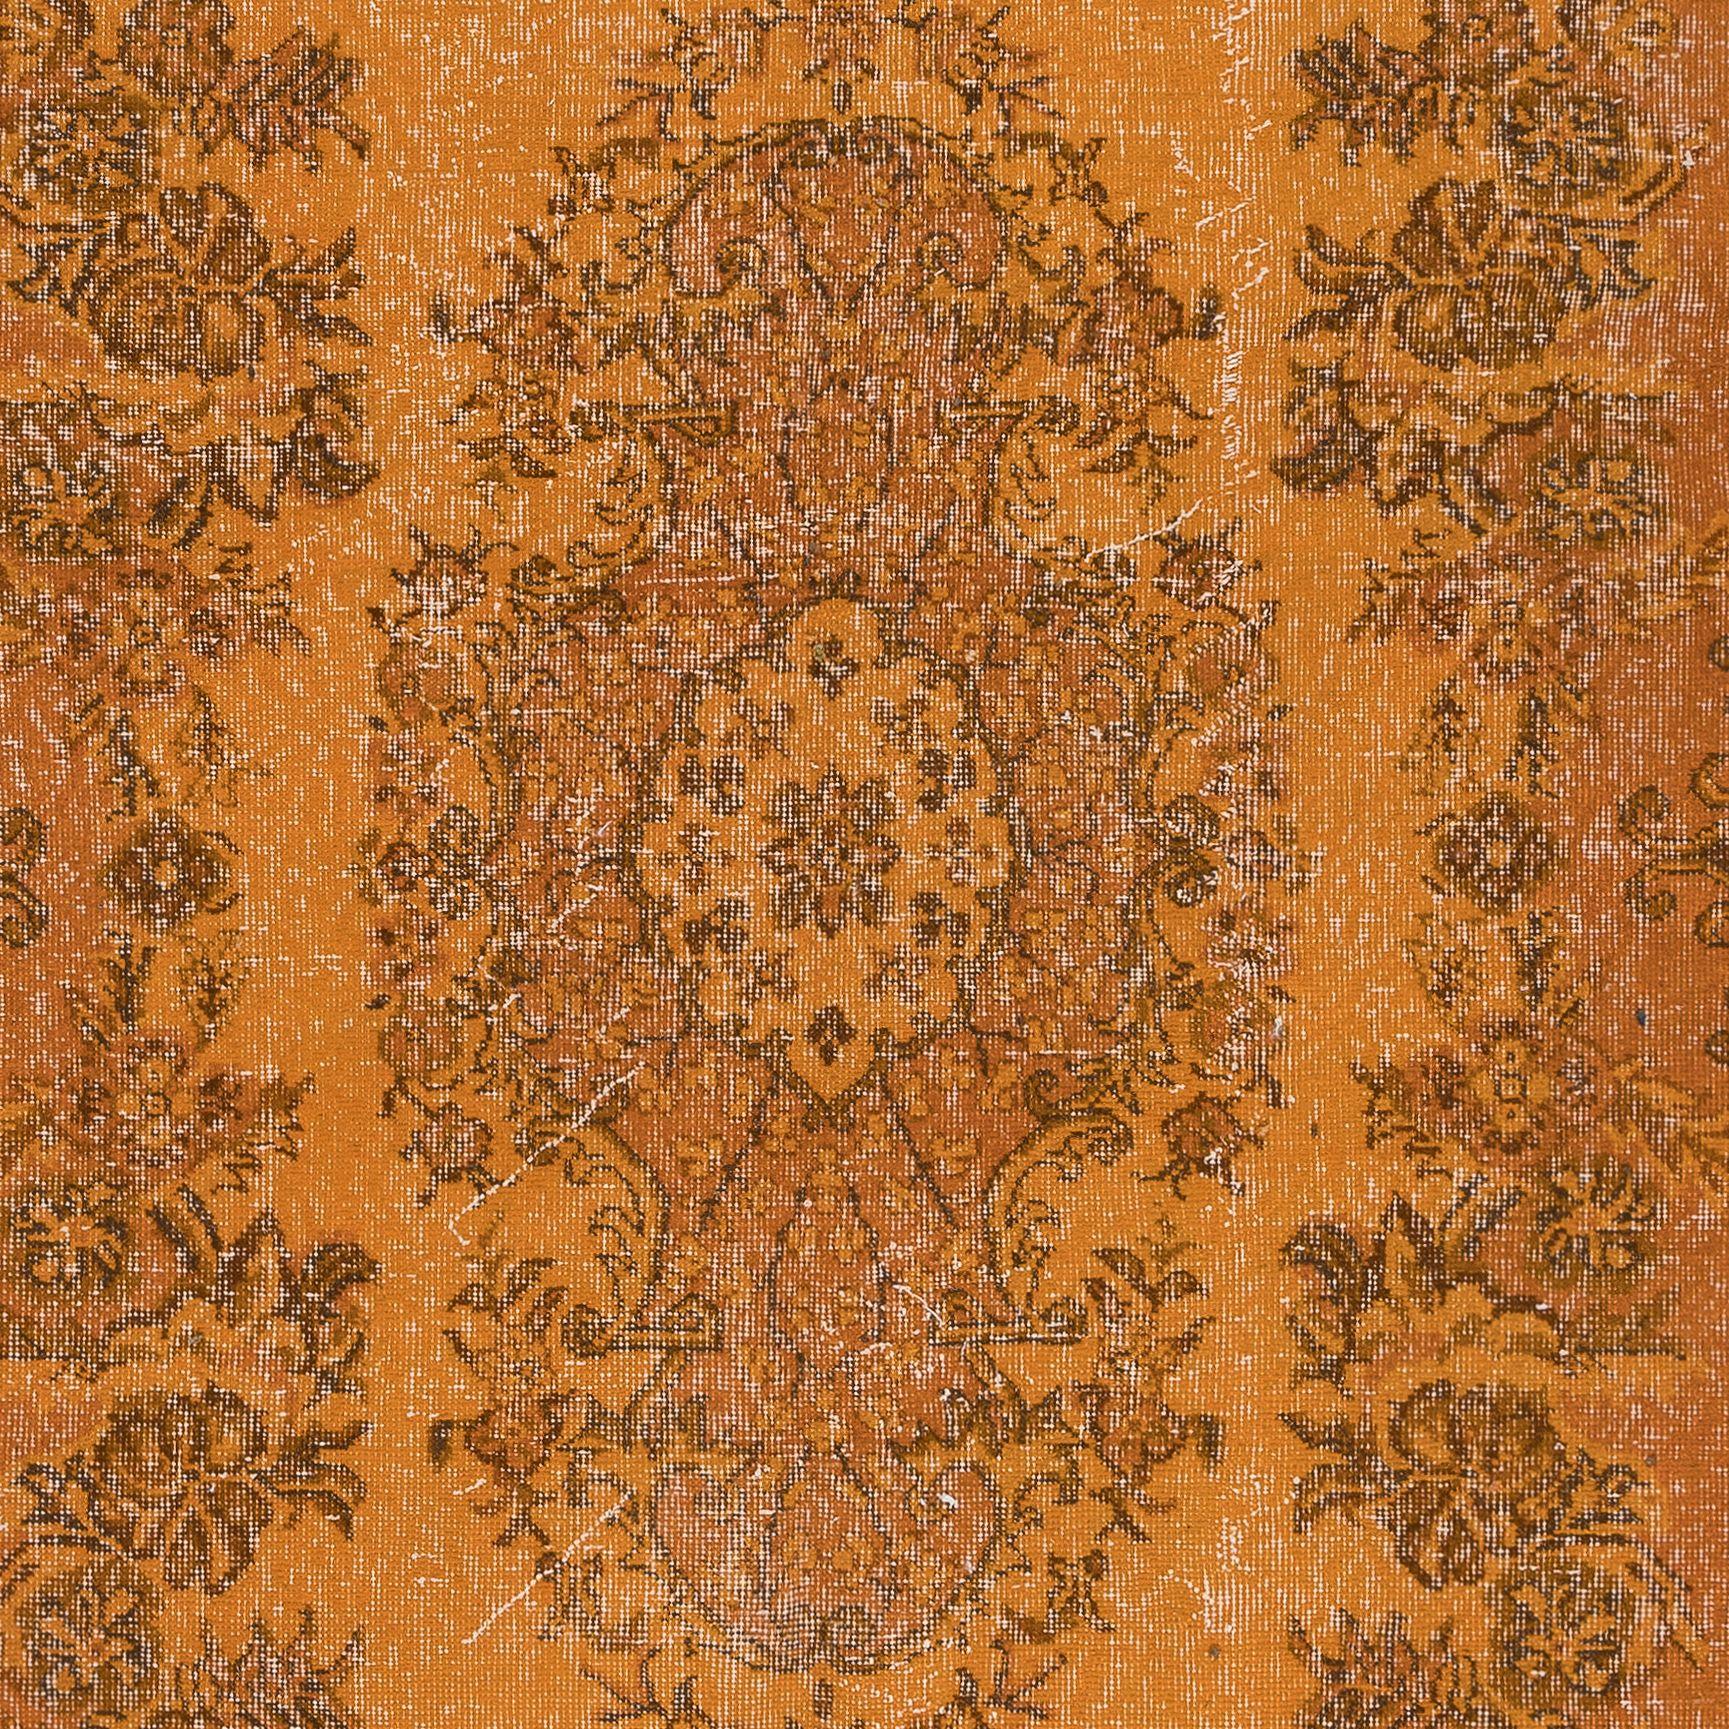 Hand-Knotted 5.2x9 Ft Handmade Turkish Salon Rug in Orange, Modern Bedroom Wool Carpet For Sale